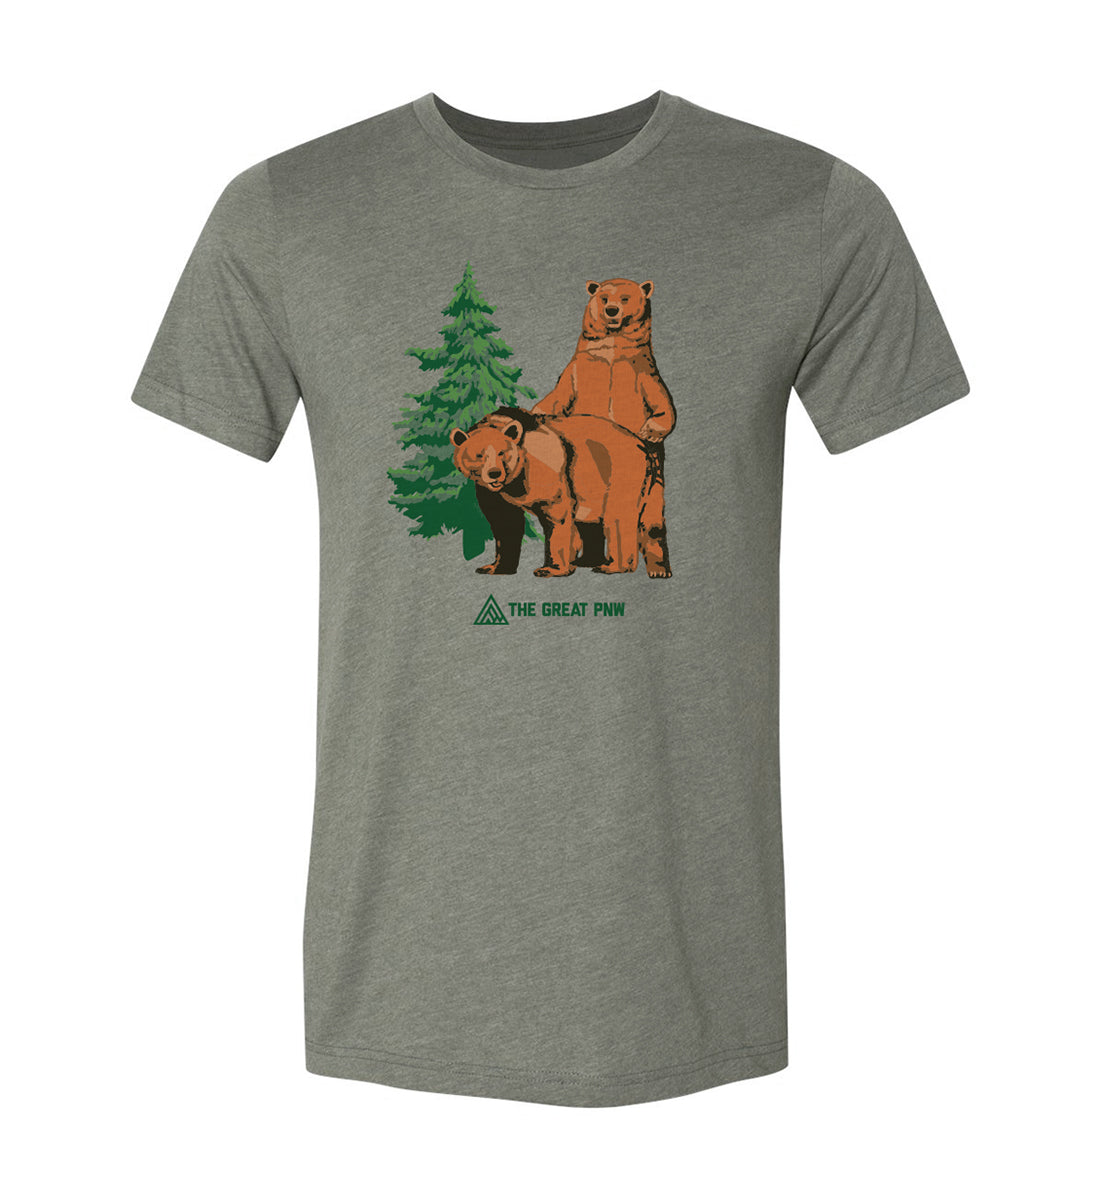 Plus Size women's top cartoon bear print t-shirt - The Little Connection